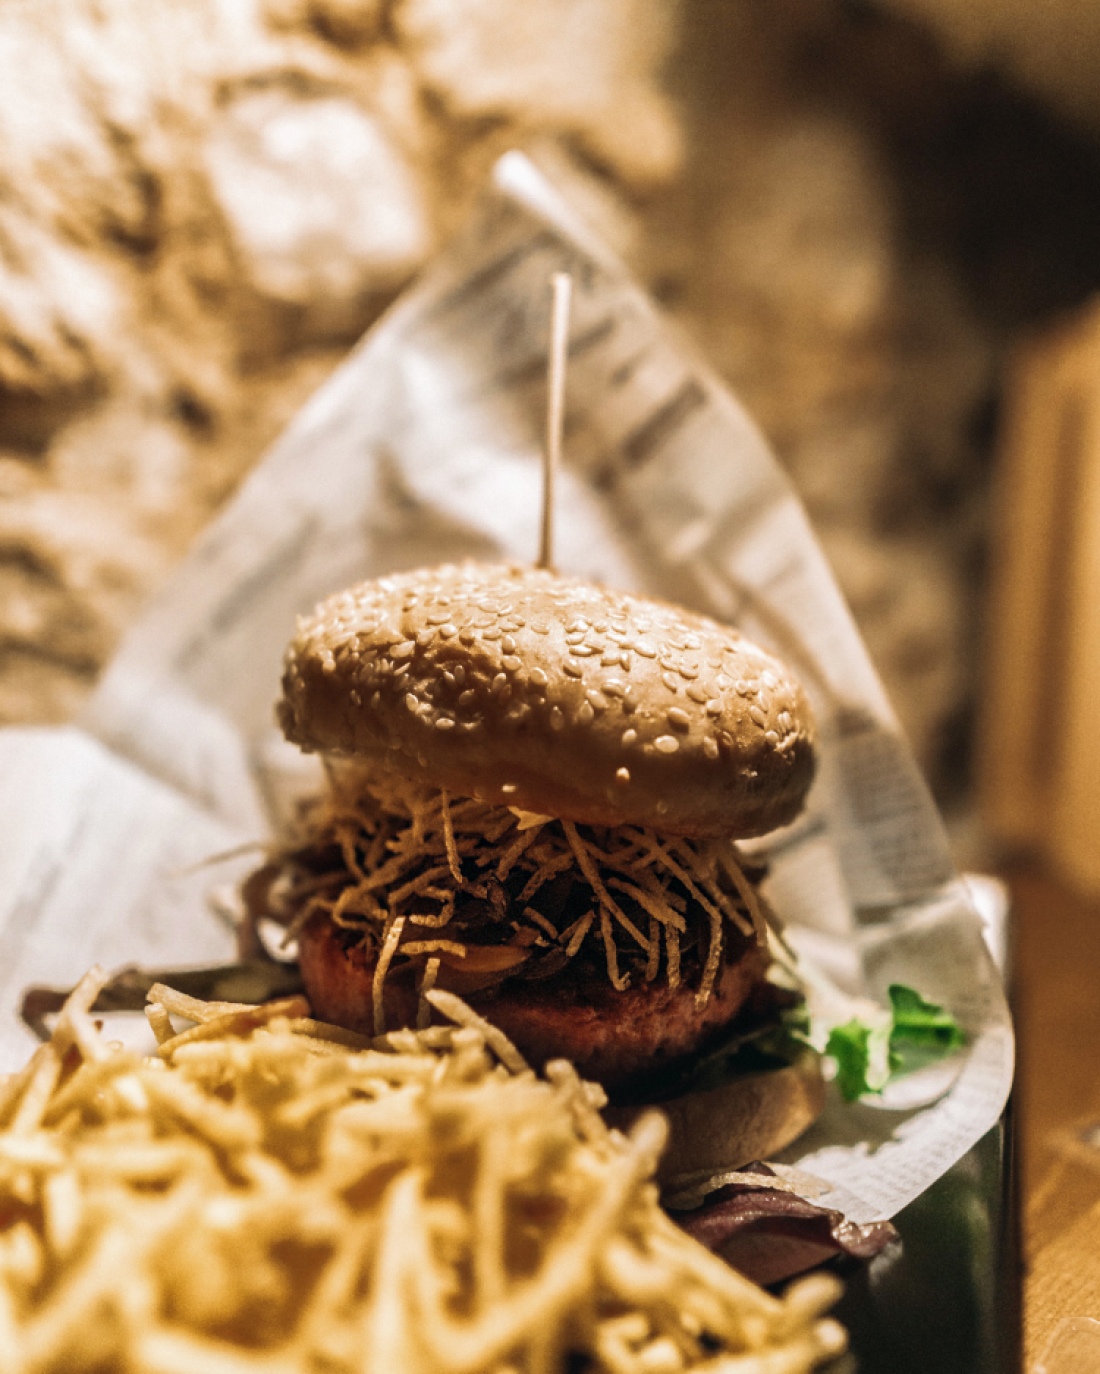 Vegan restaurants in Lisbon, Portugal - Beyond burger in The Botanical Den